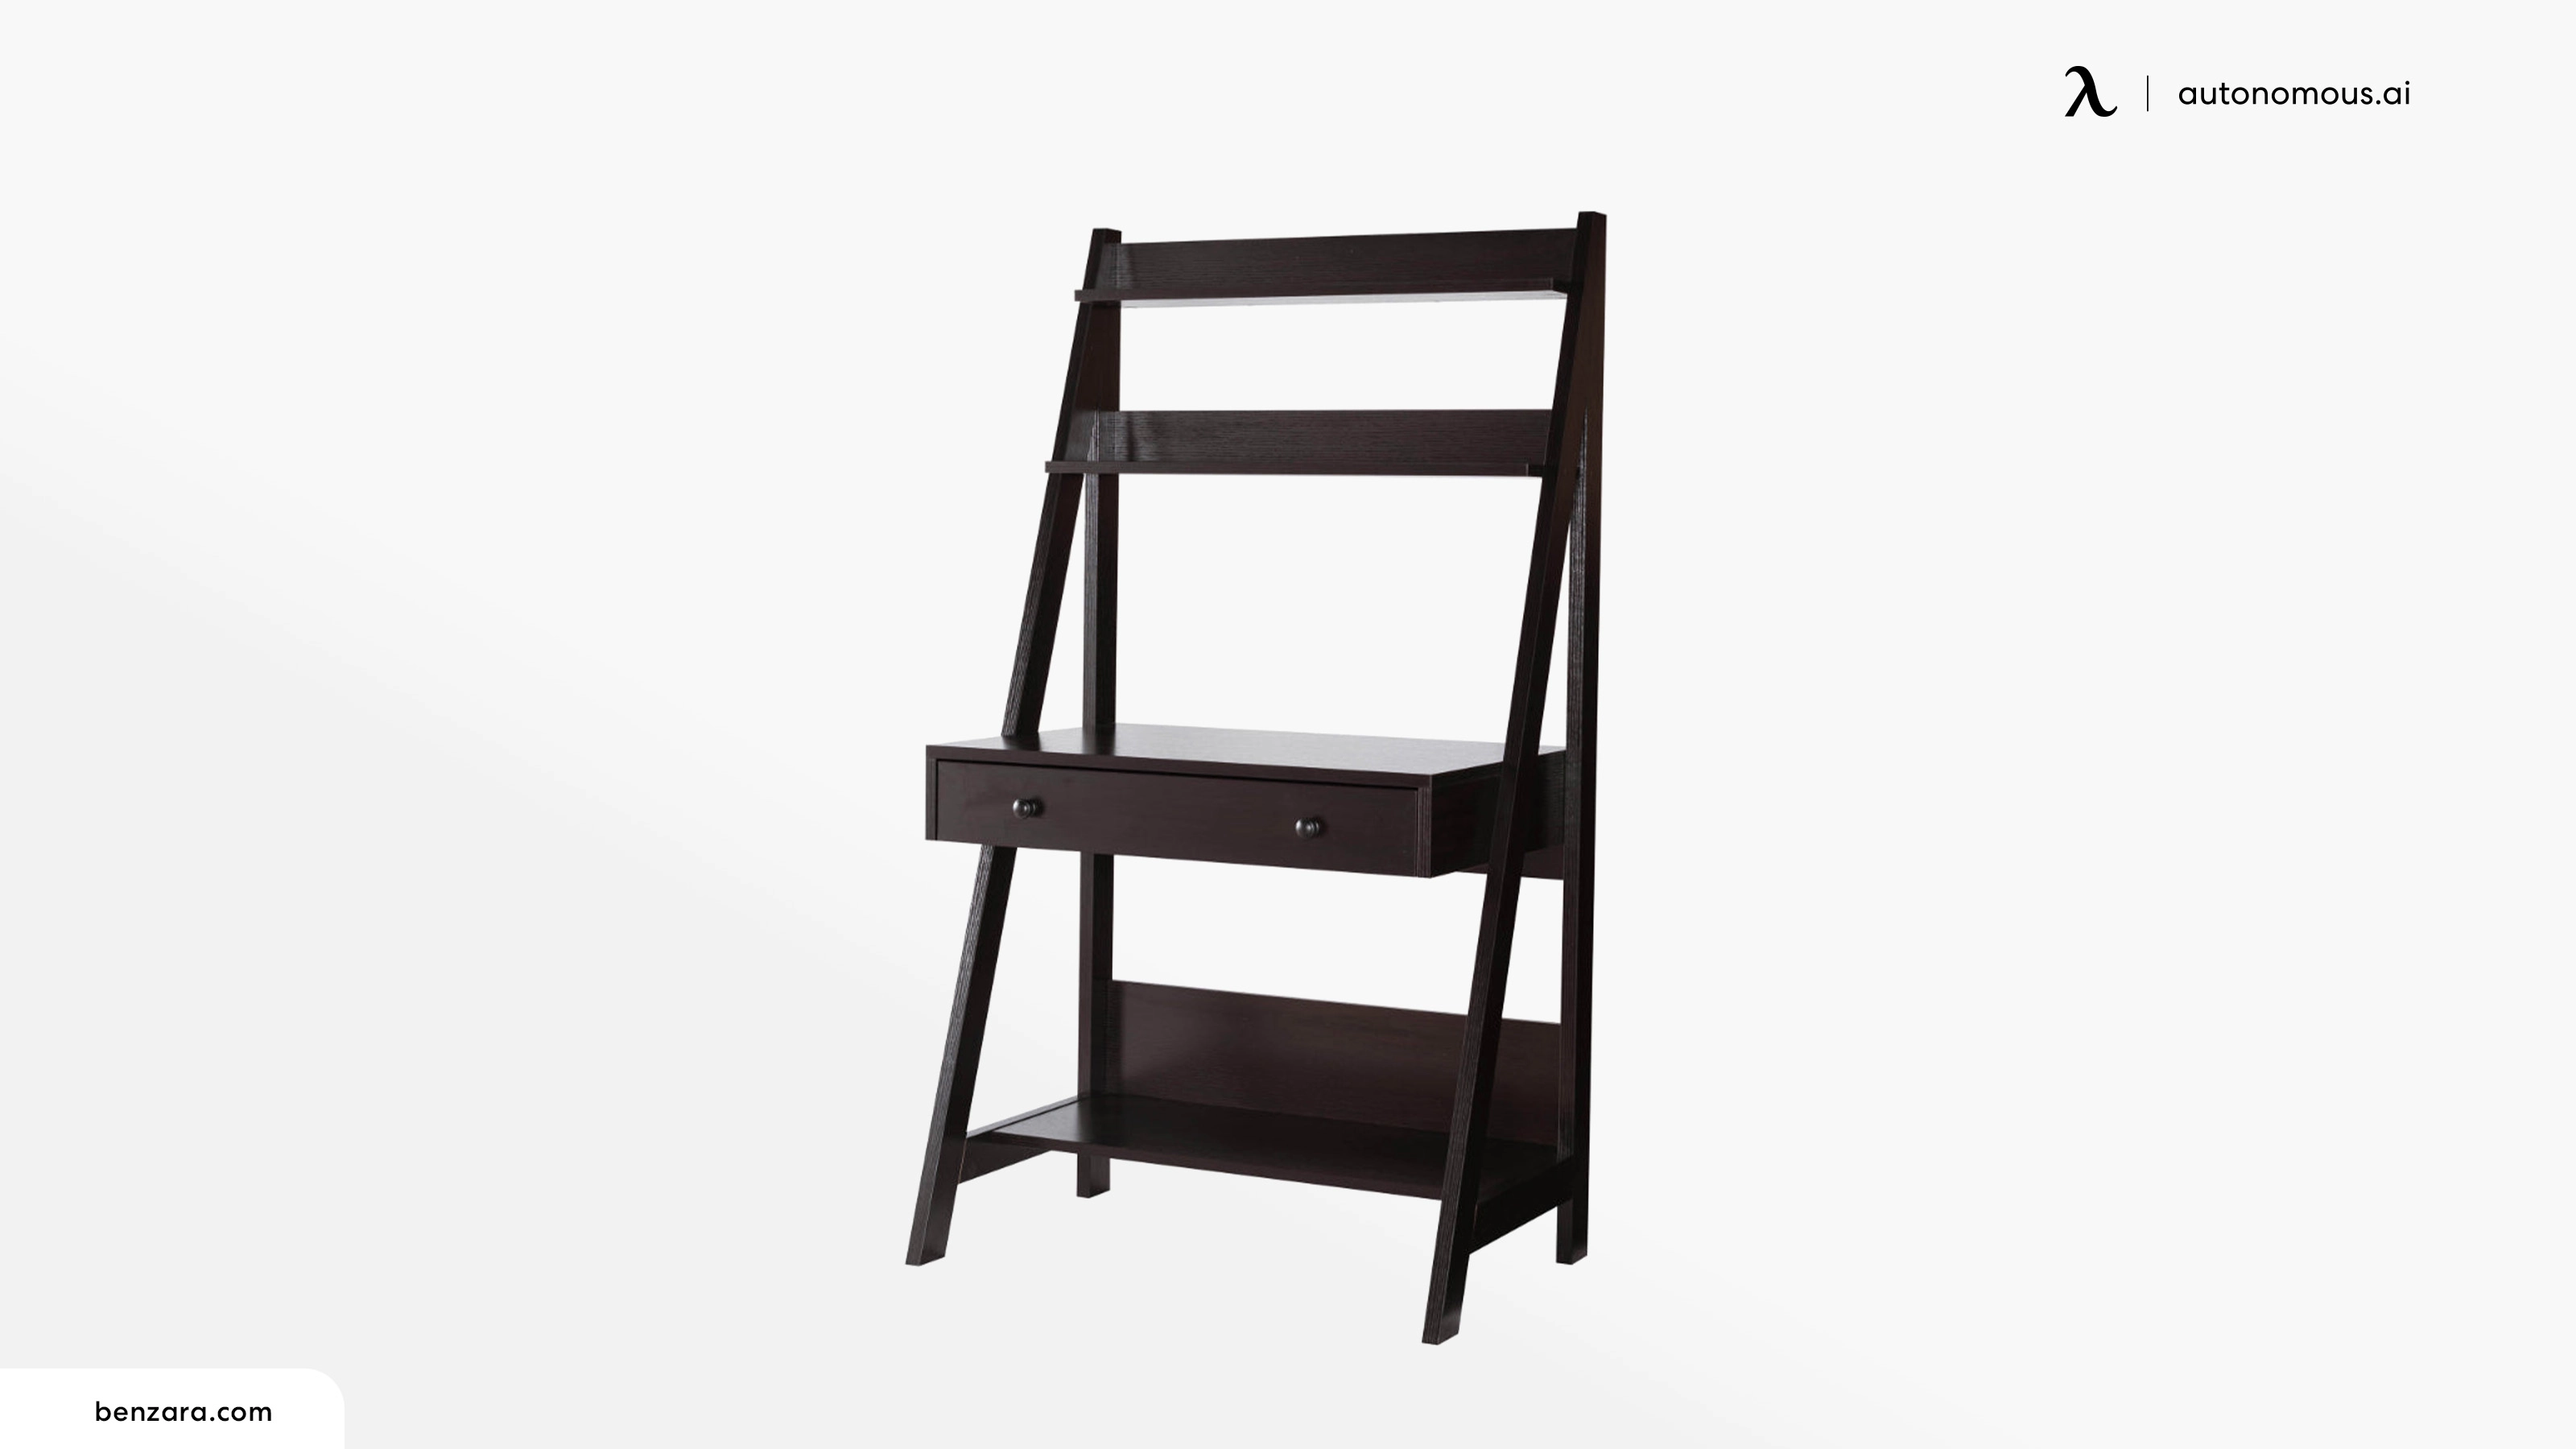 Benzara Contemporary Style Ladder Desk